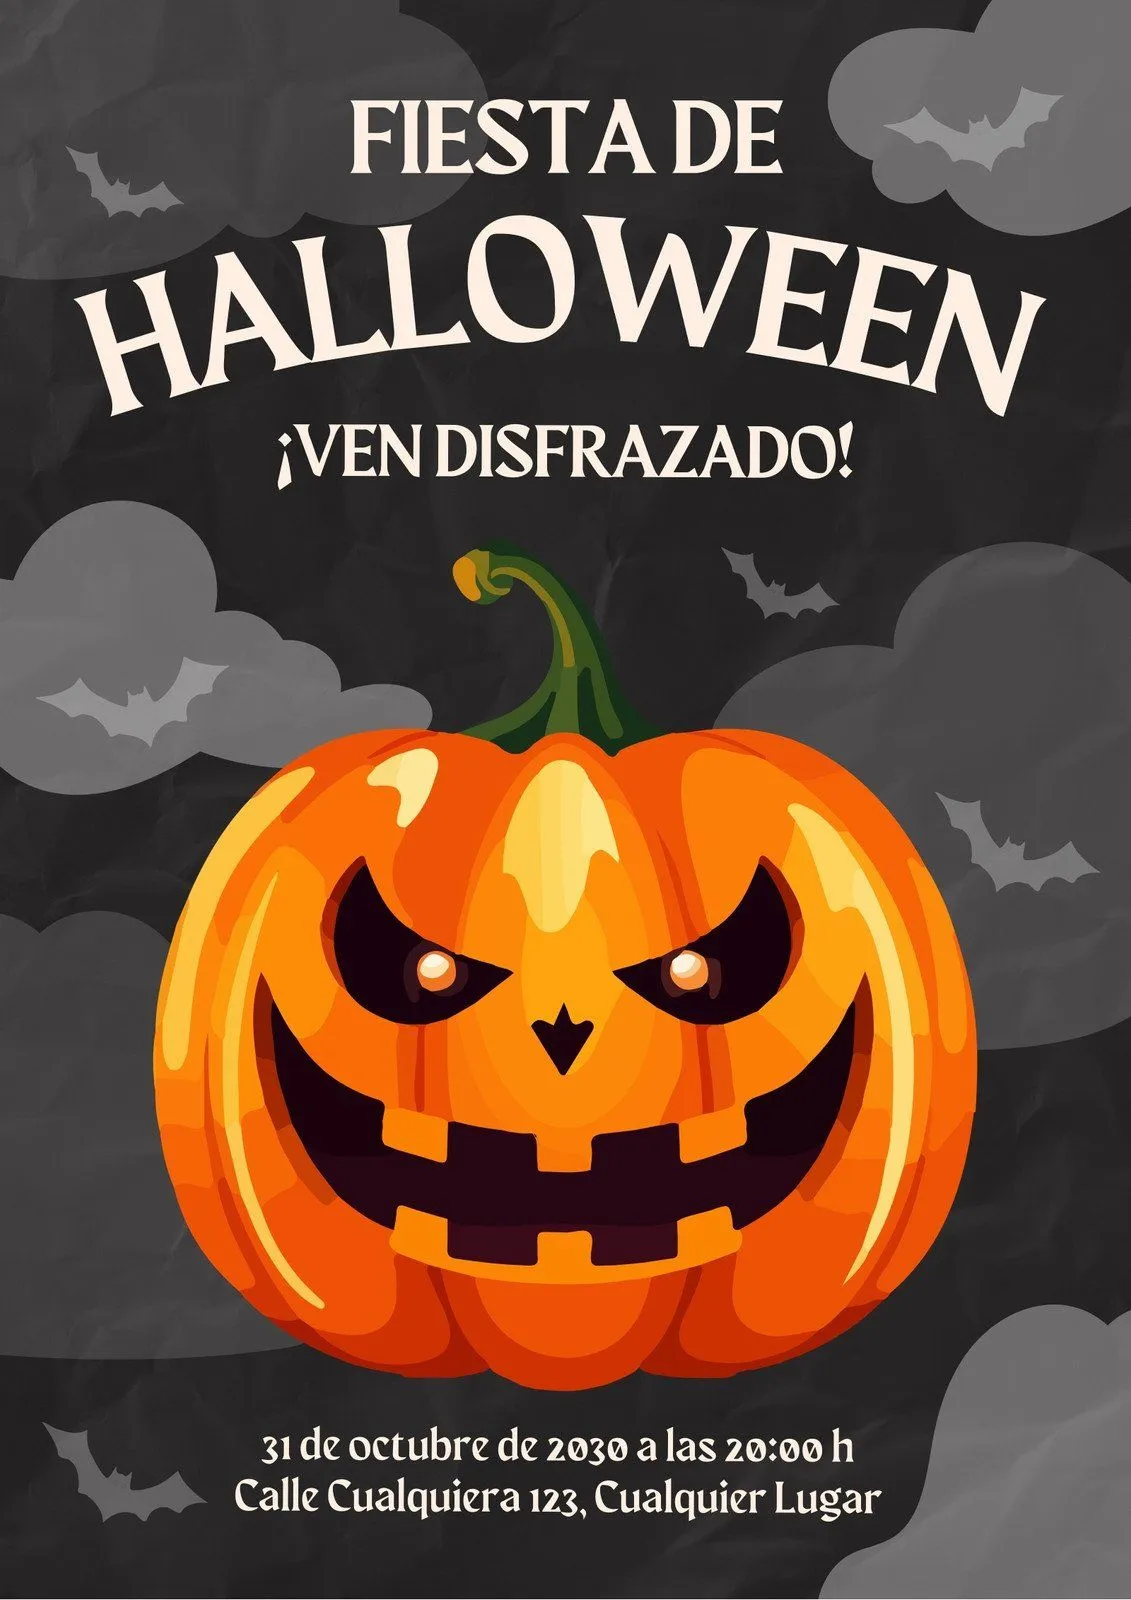 Plantillas de carteles de Halloween para imprimir gratis | Canva